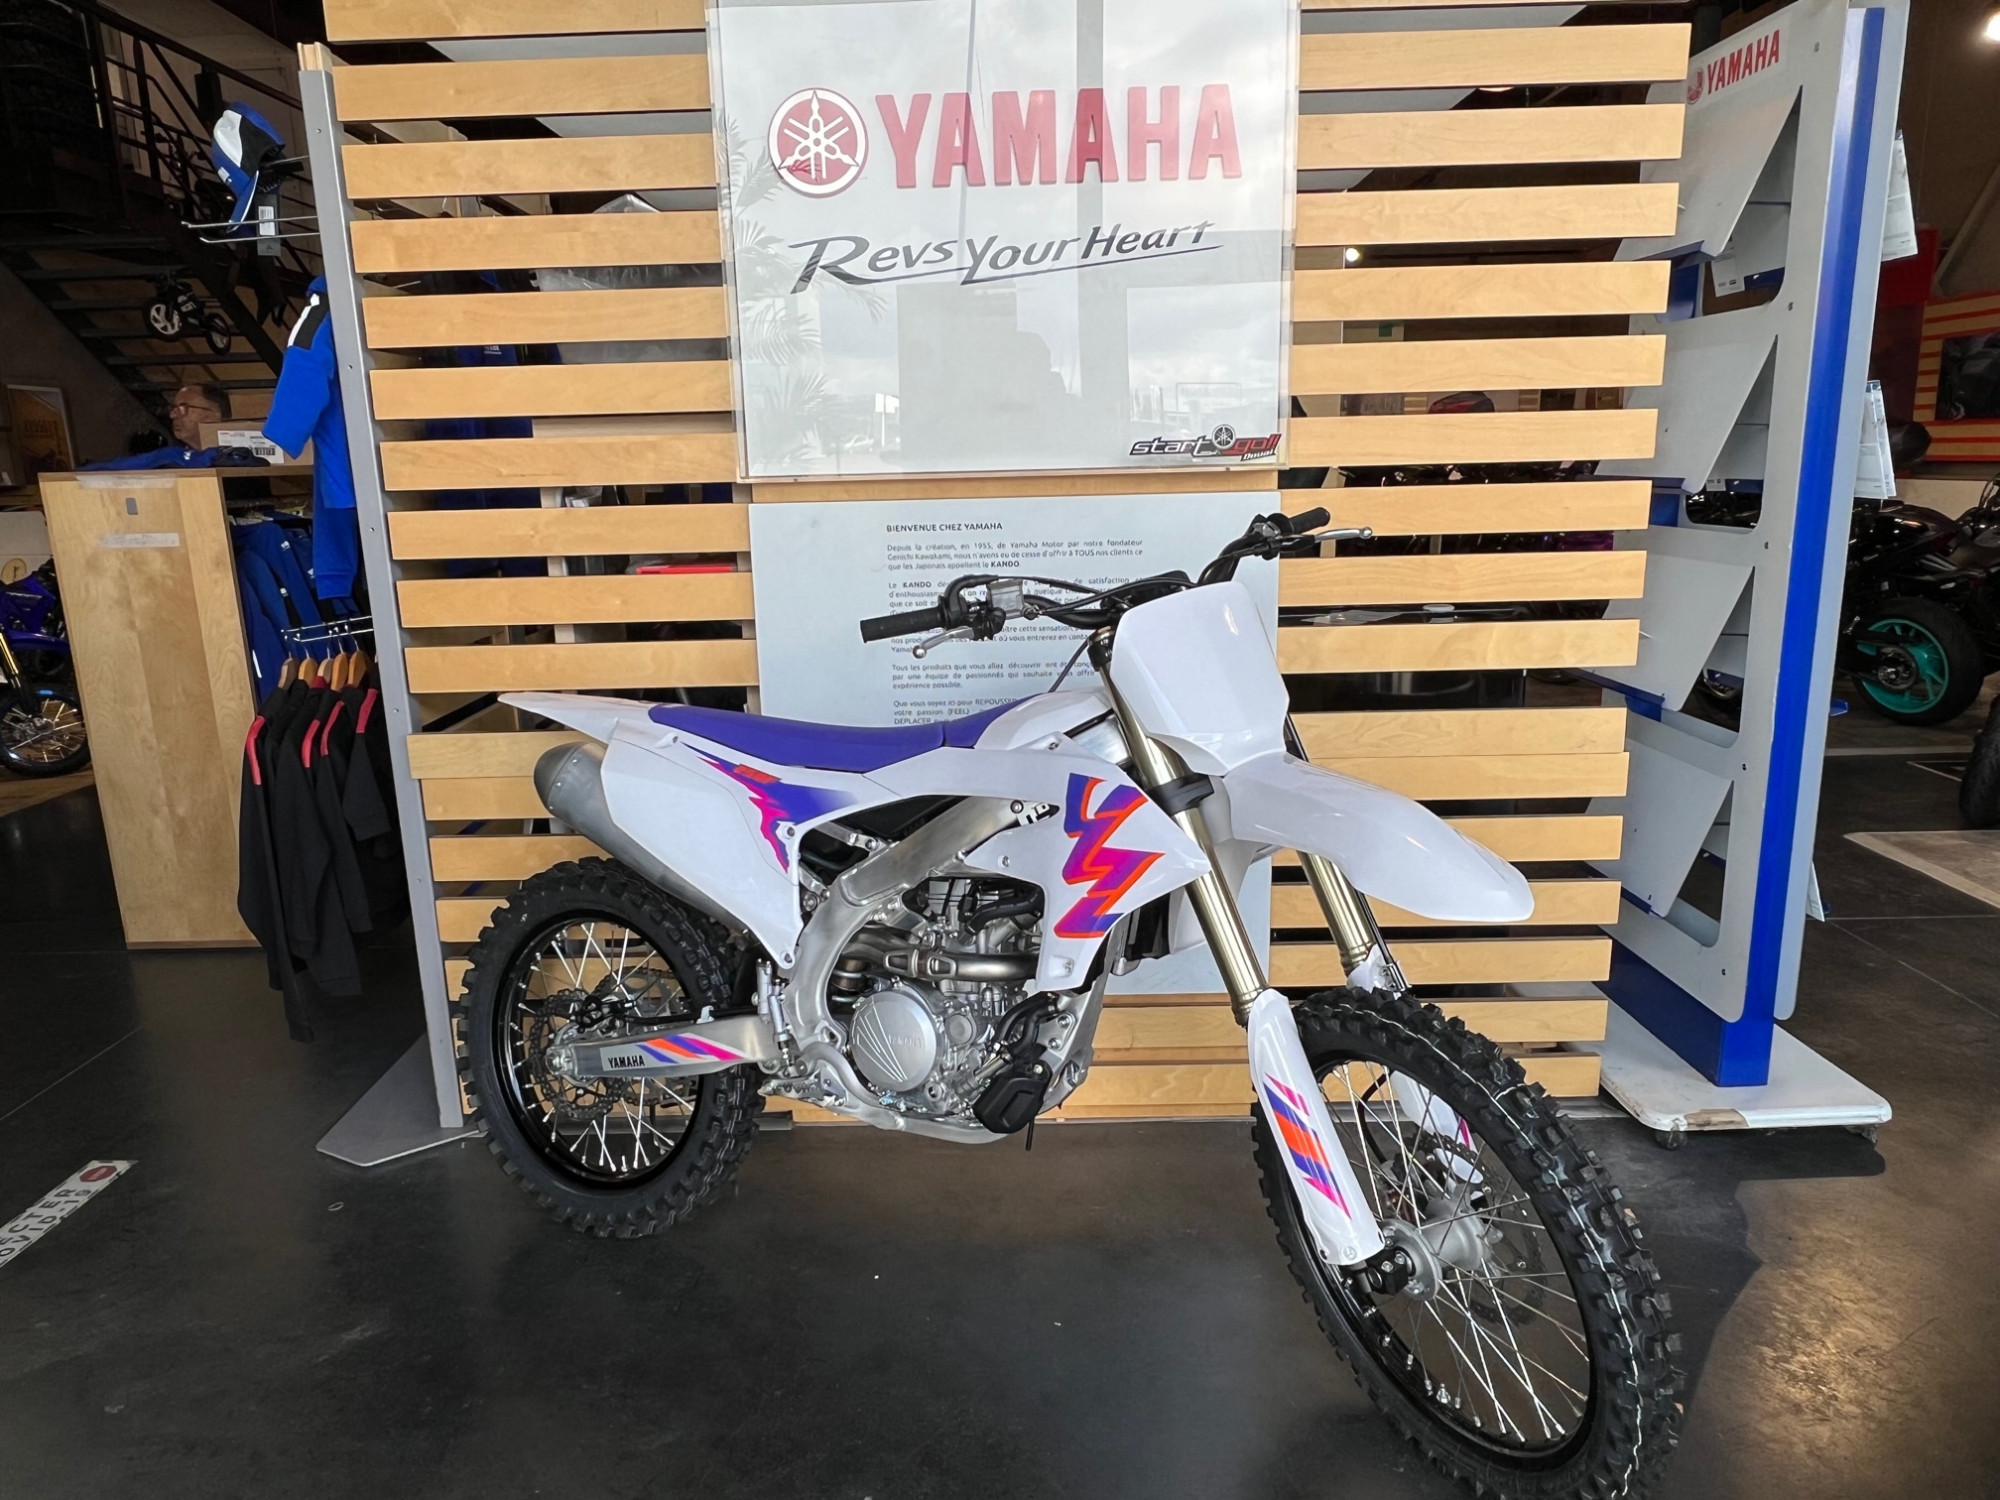 Annonce moto Yamaha YZ